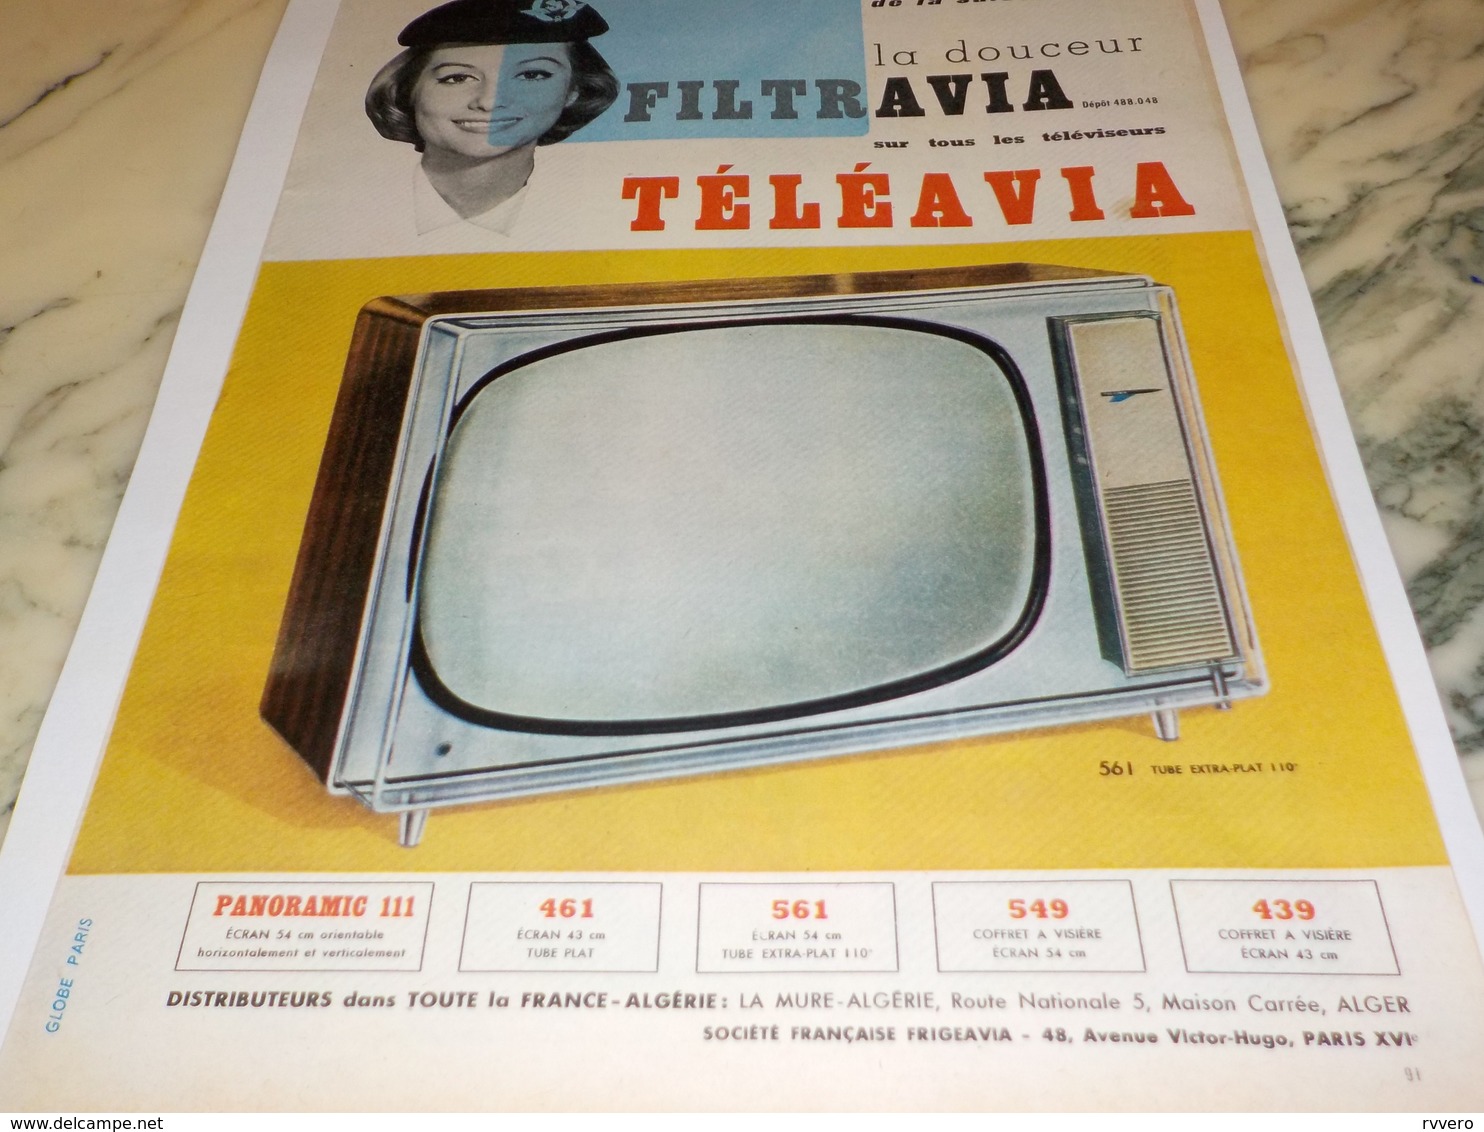 ANCIENNE PUBLICITE TELEVISION TELEAVIA  1960 - Televisie